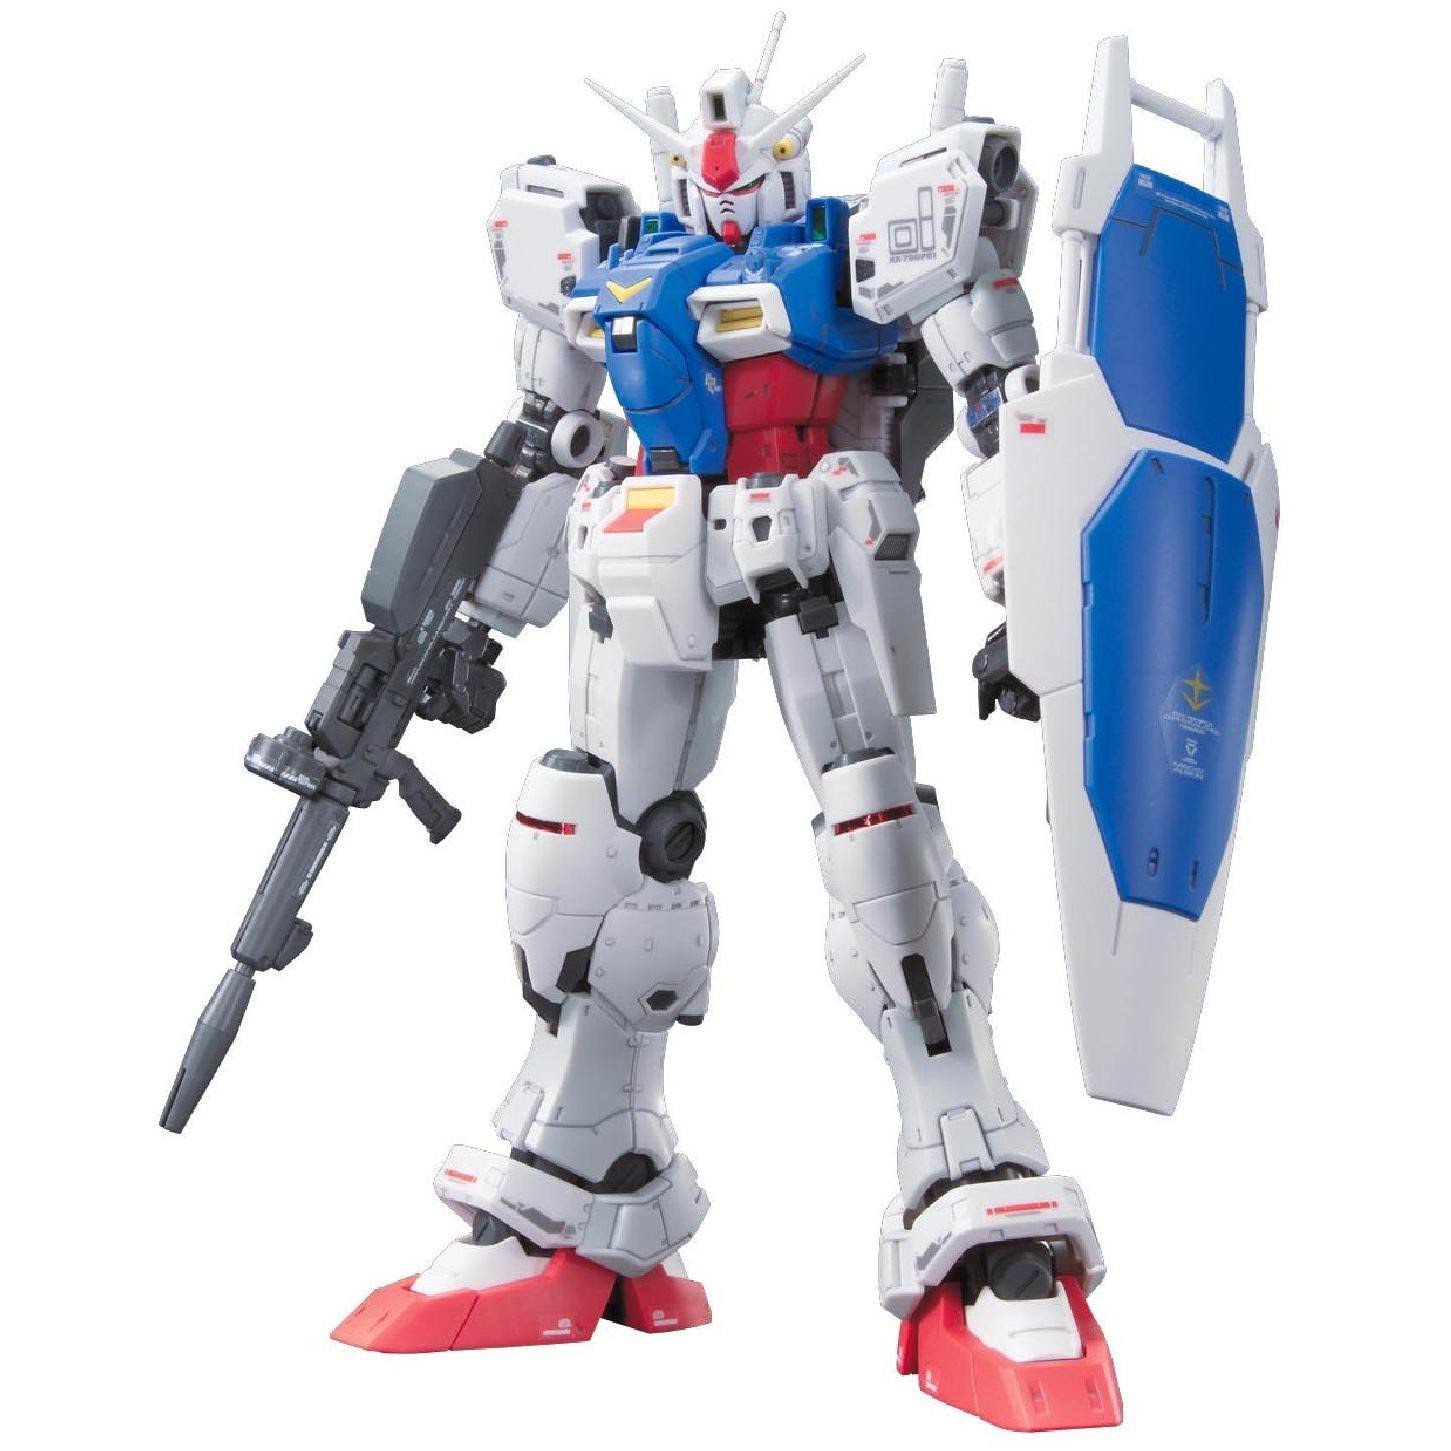 Bandai Hobby Real Grade 12 Gundam GP01 Zephyranthes Action Figure Model Kit - 1/144 Scale